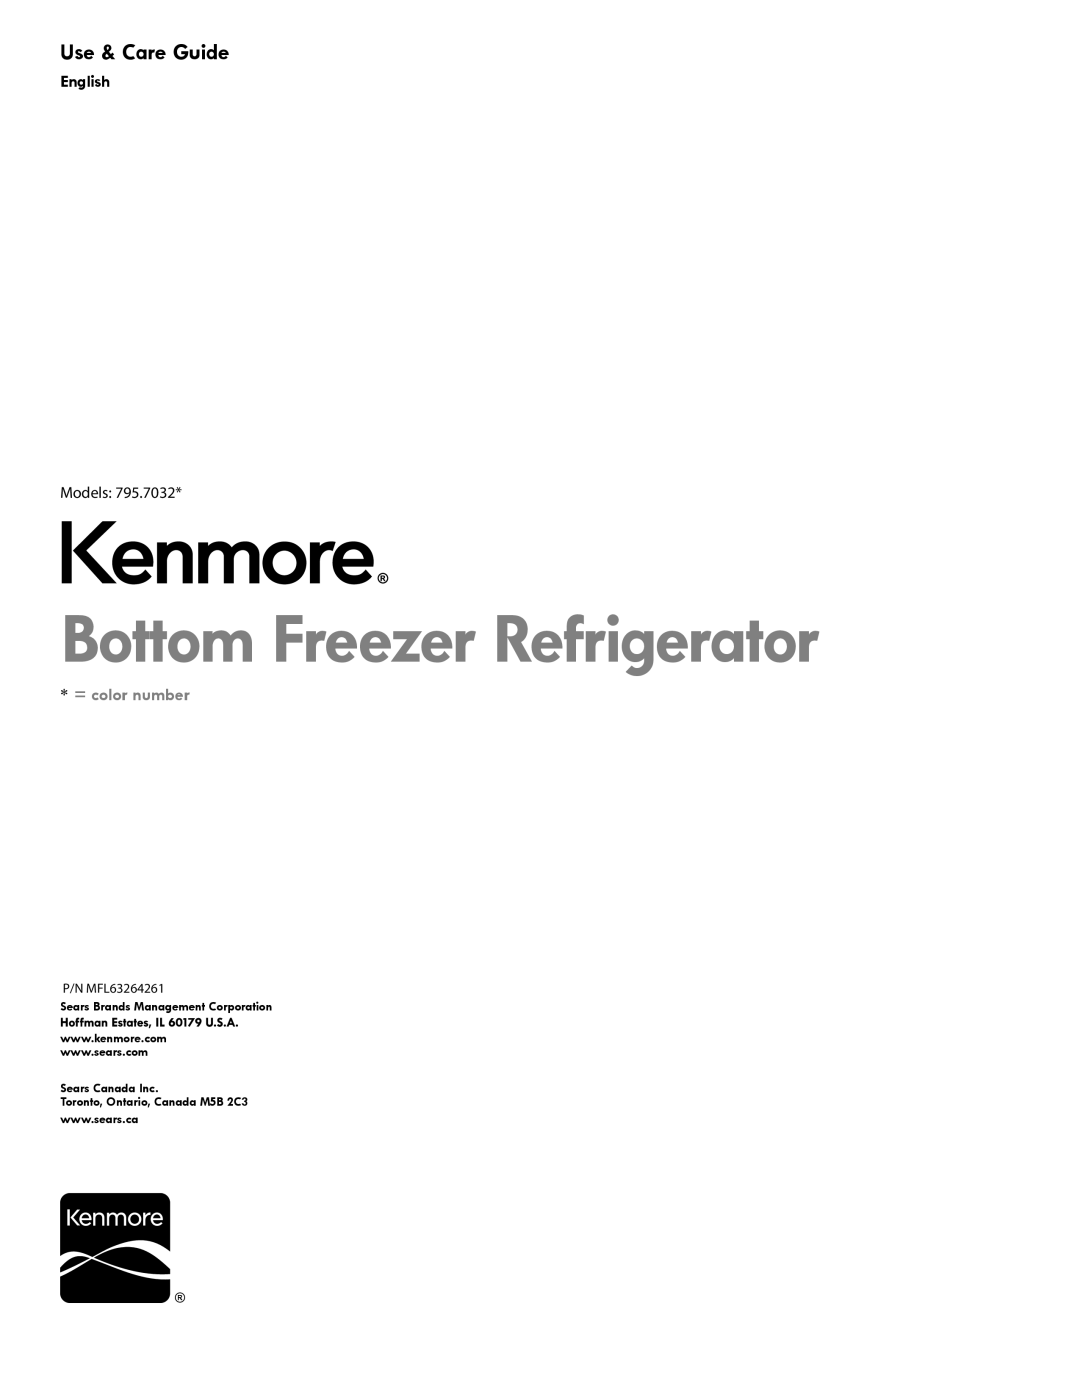 Kenmore kenmore manual Bottom Freezer Refrigerator, Use & Care Guide, = color number, English, Models, P/N MFL63264261 